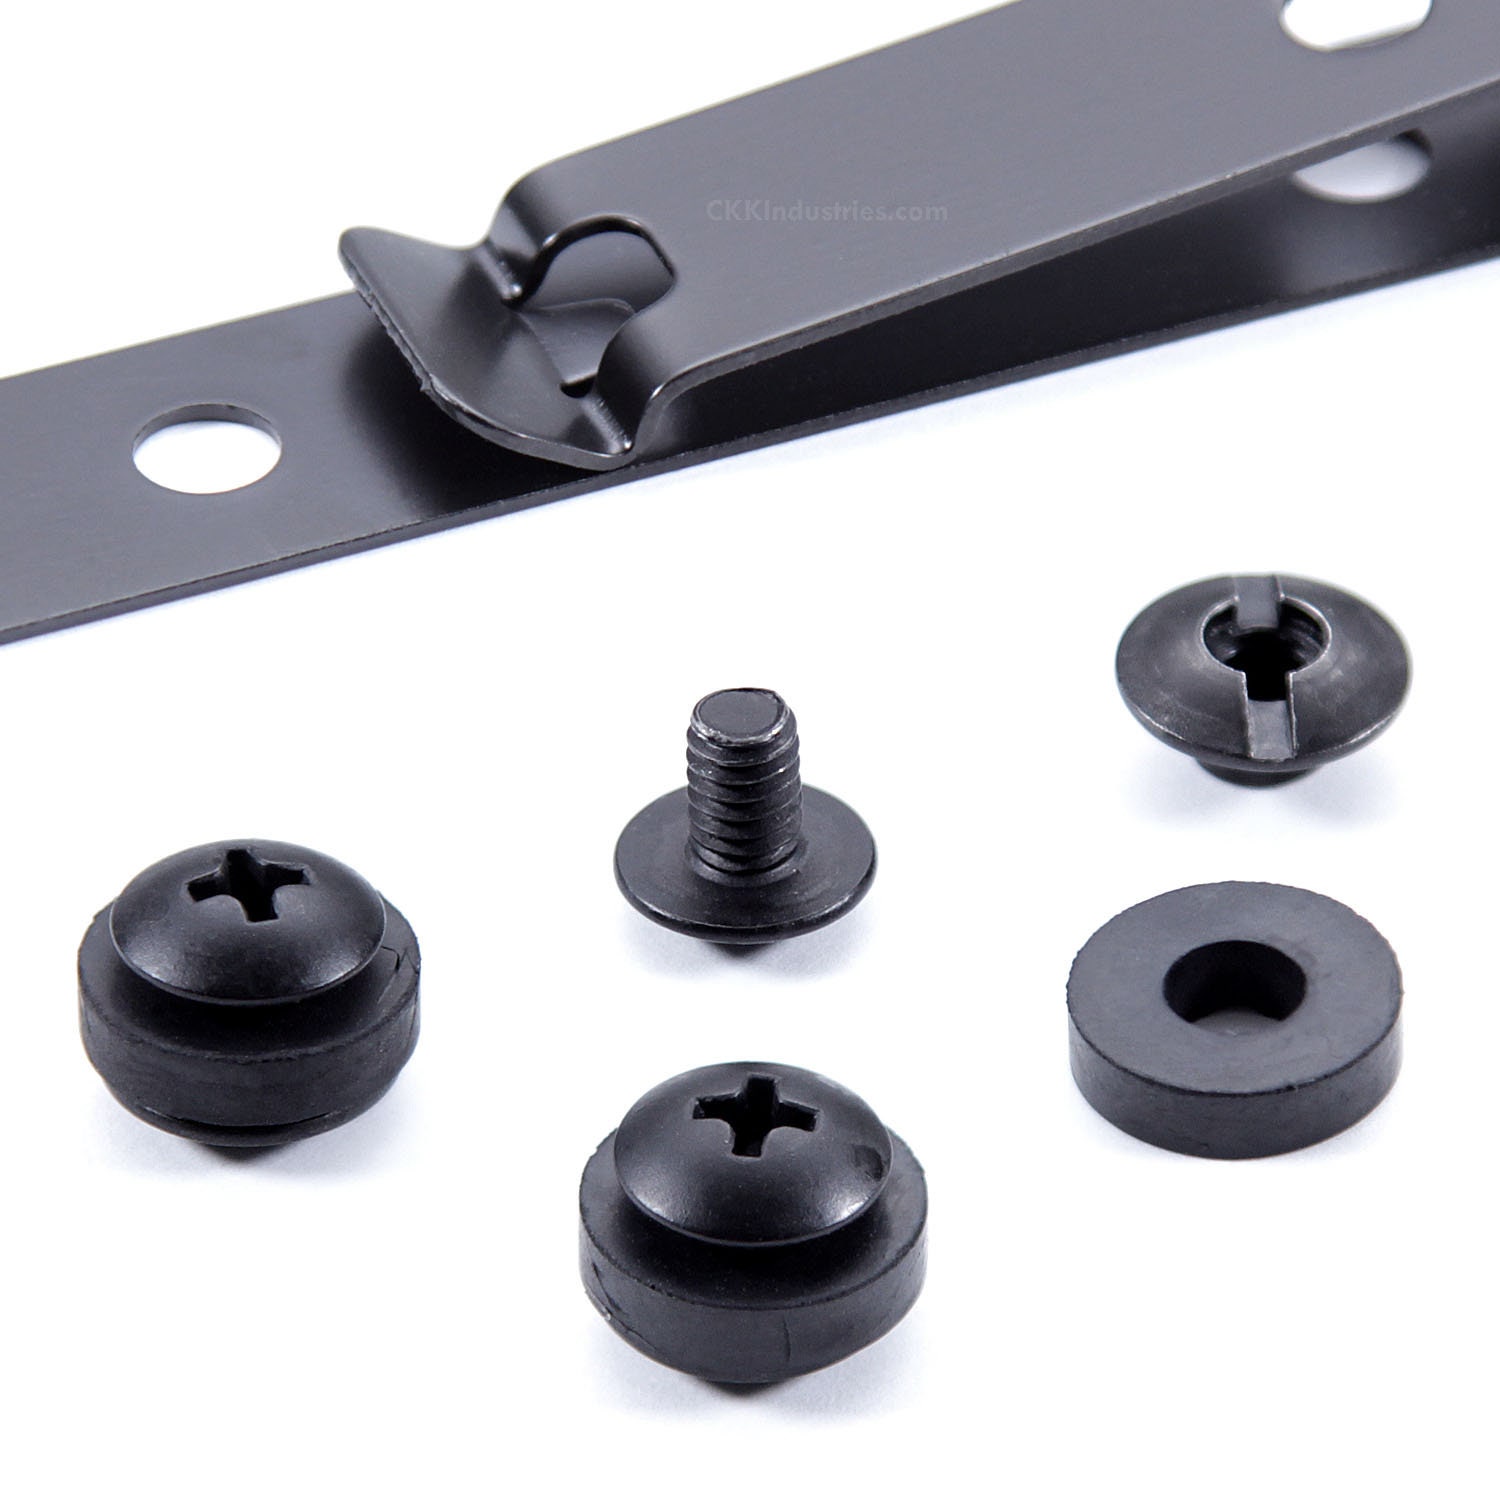 Universal Metal Belt Clip for Holsters/sheaths model 5 3-hole tactical  Black select Quantity Below select Hardware Below 